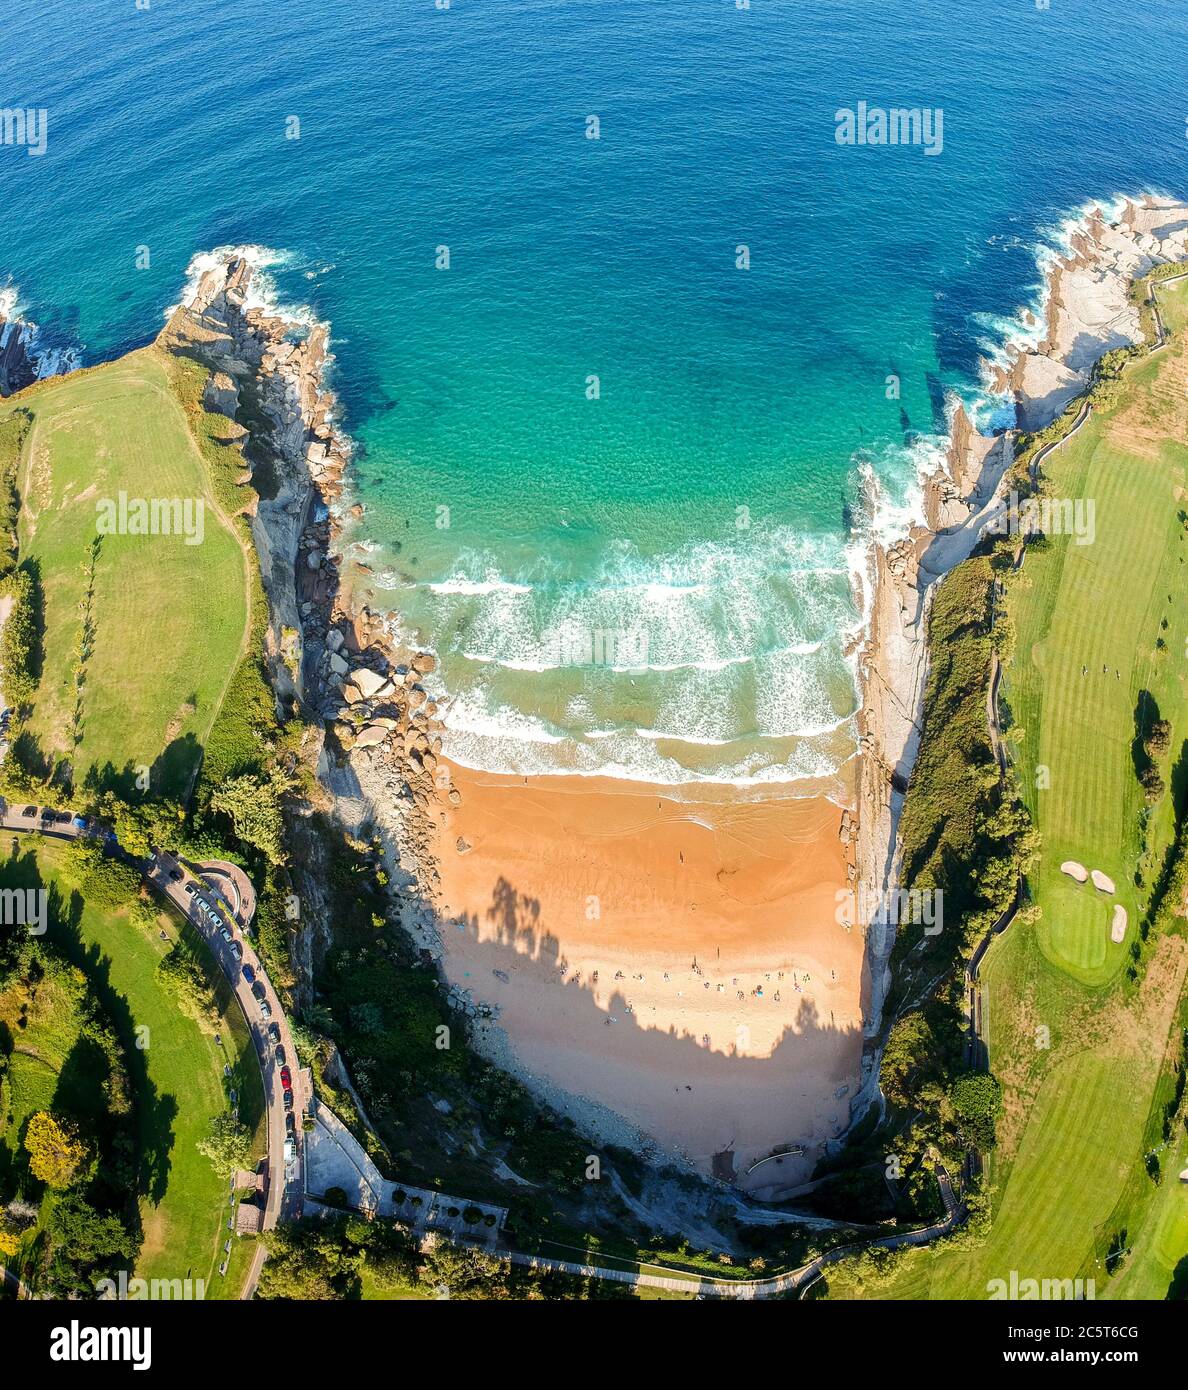 Santander City Beach Aerial View Stock Photo - Download Image Now -  Santander - Spain, Spain, Bay of Water - iStock